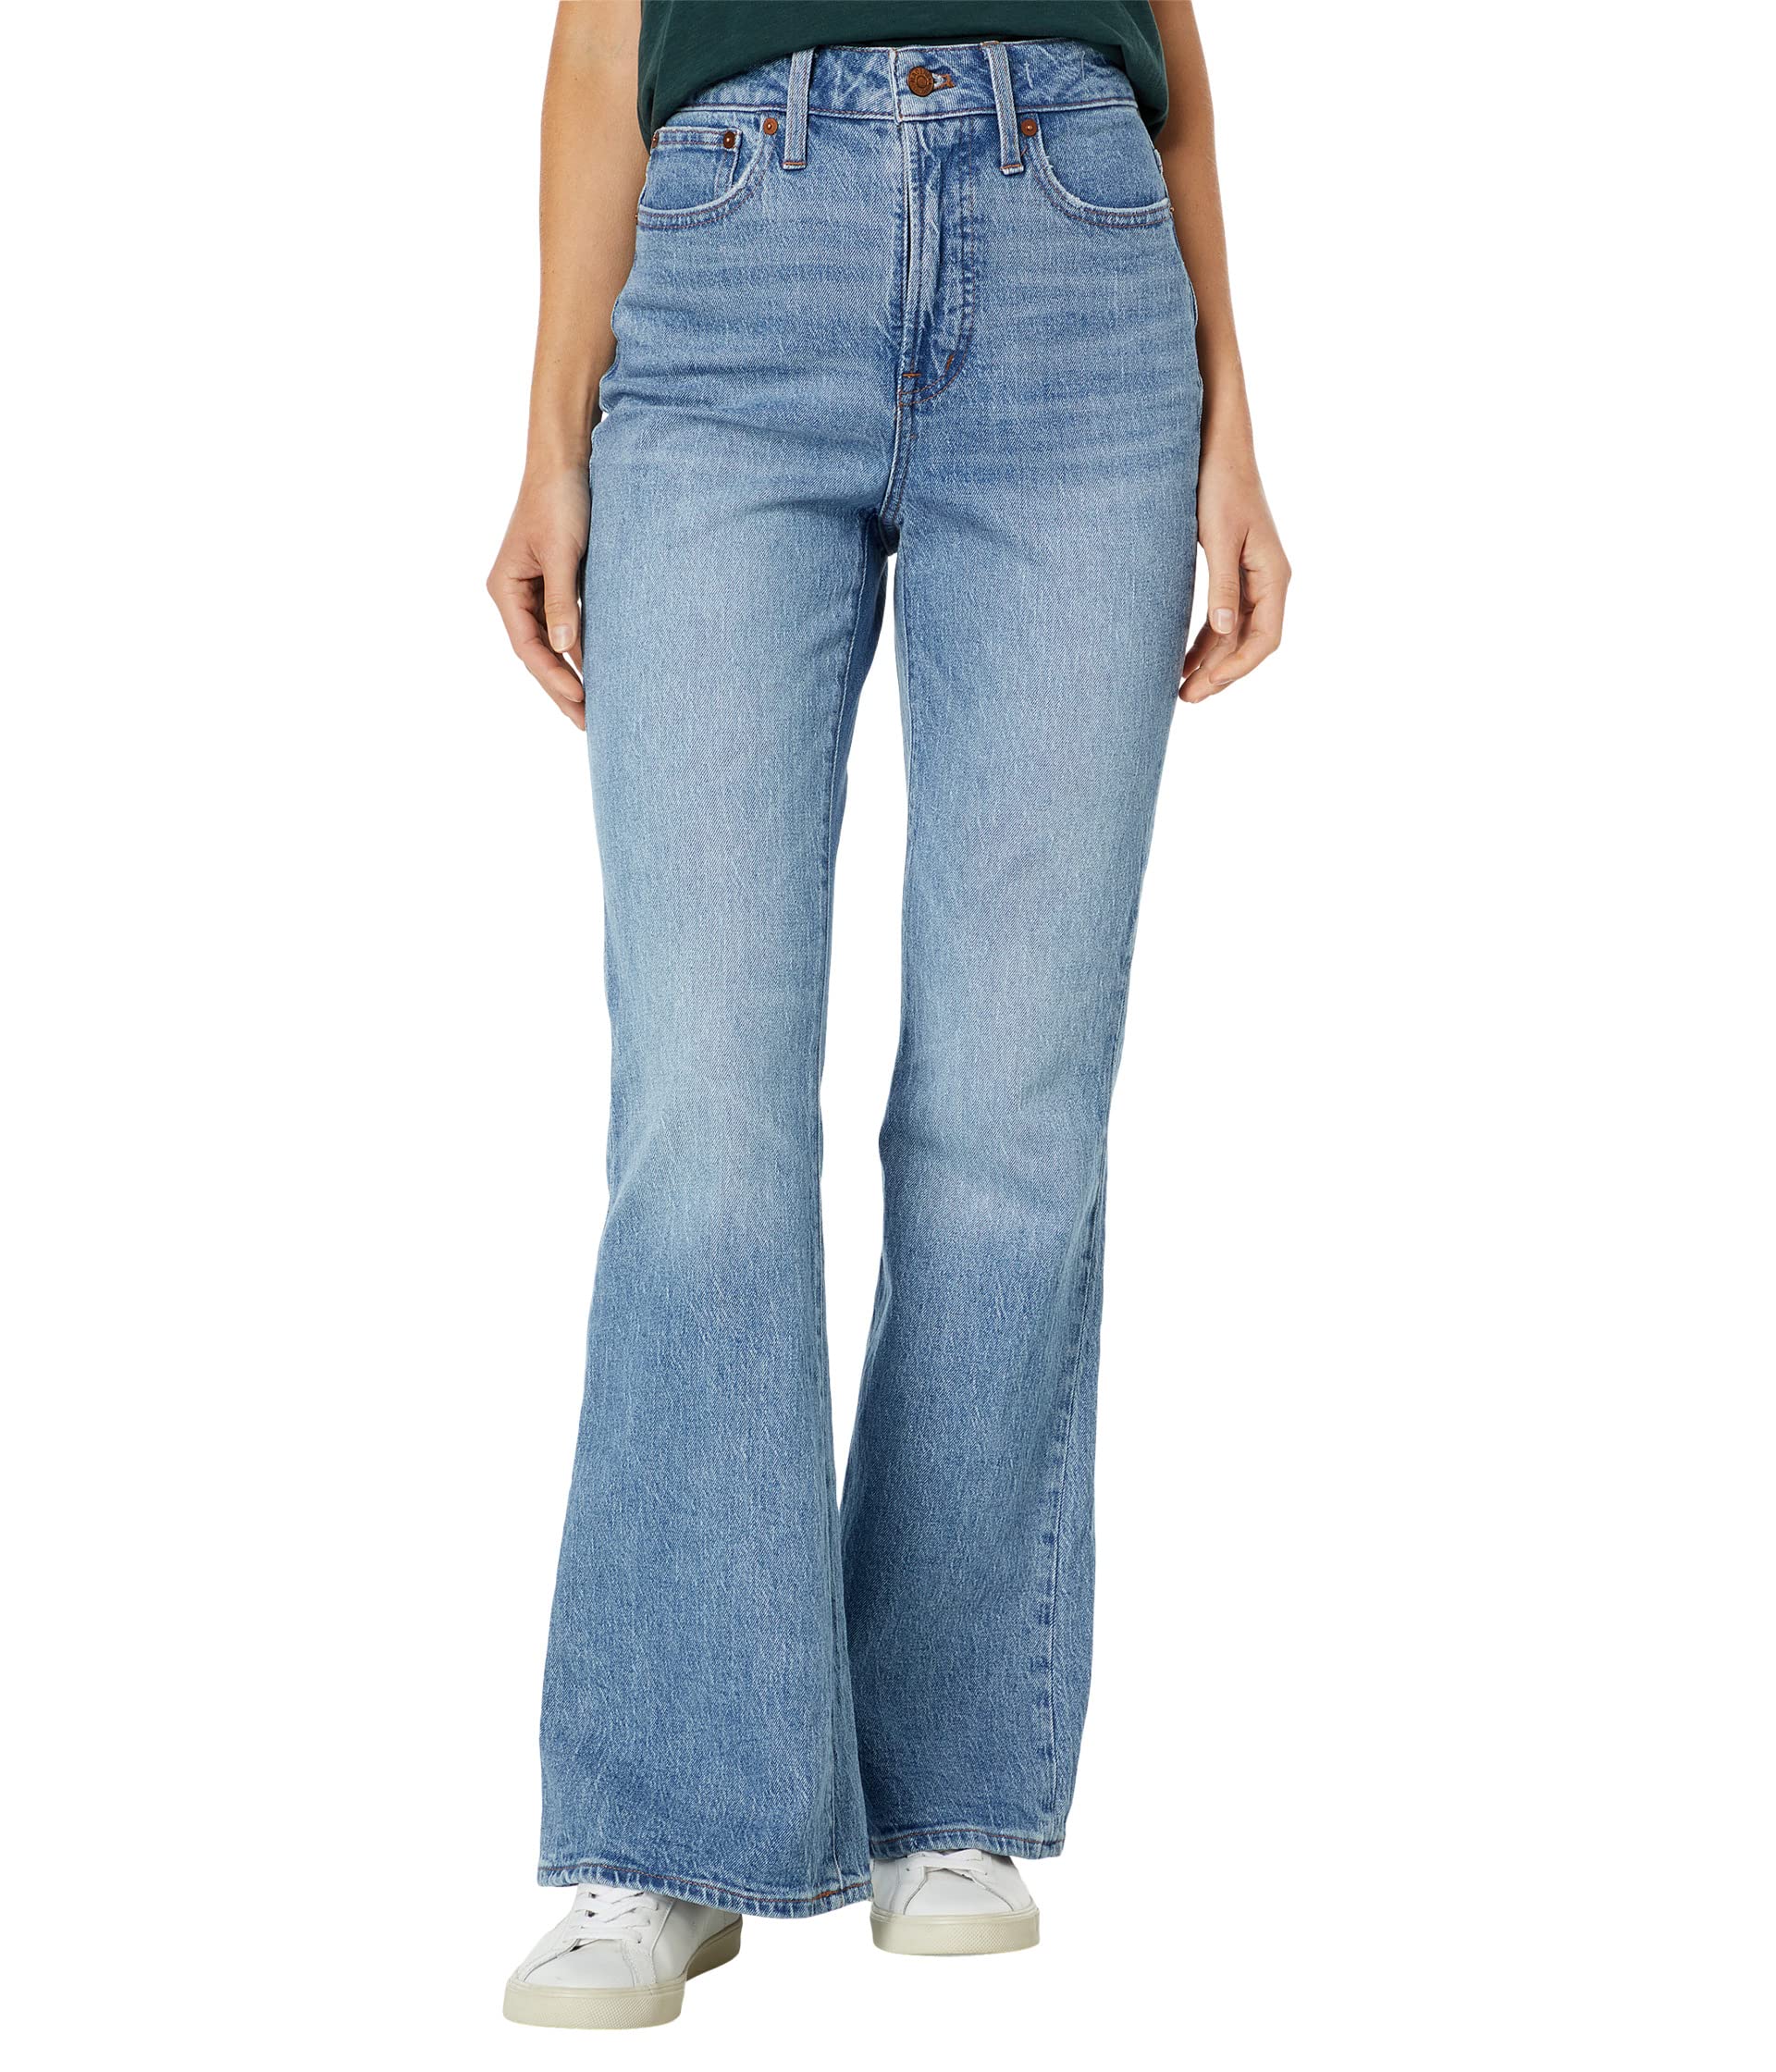 Джинсы Madewell, The Curvy Perfect Vintage Flare Jean in Delavan Wash